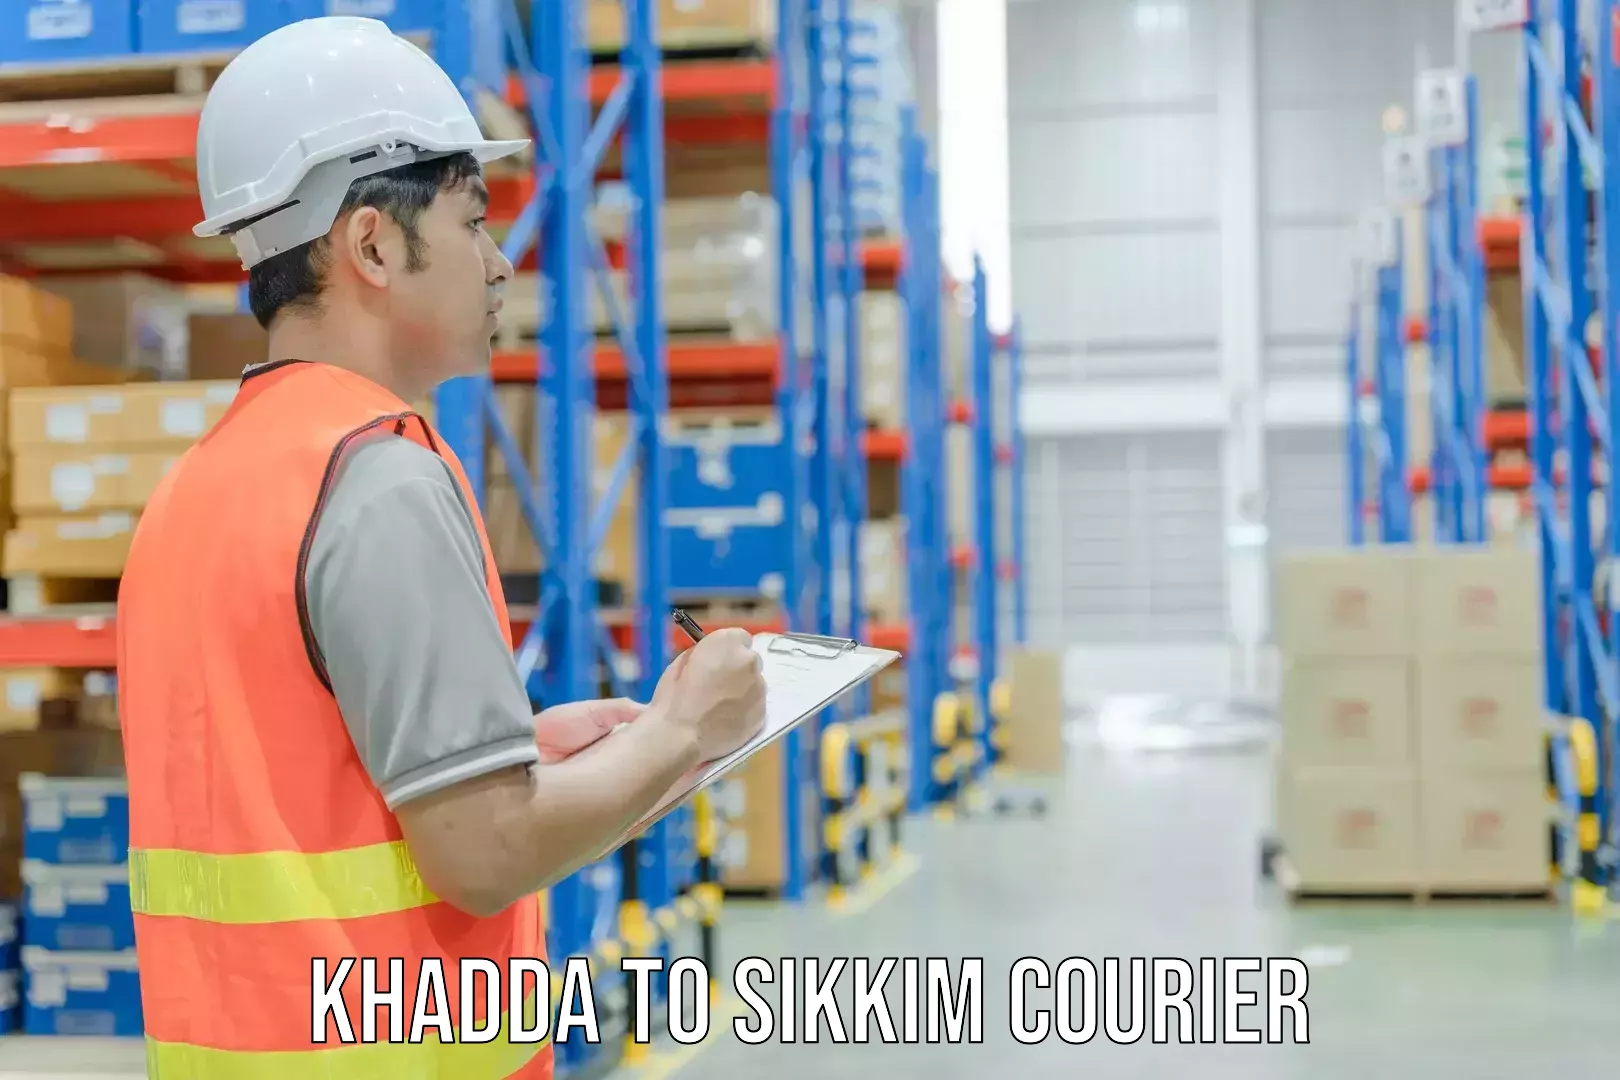 Courier service comparison Khadda to Pelling